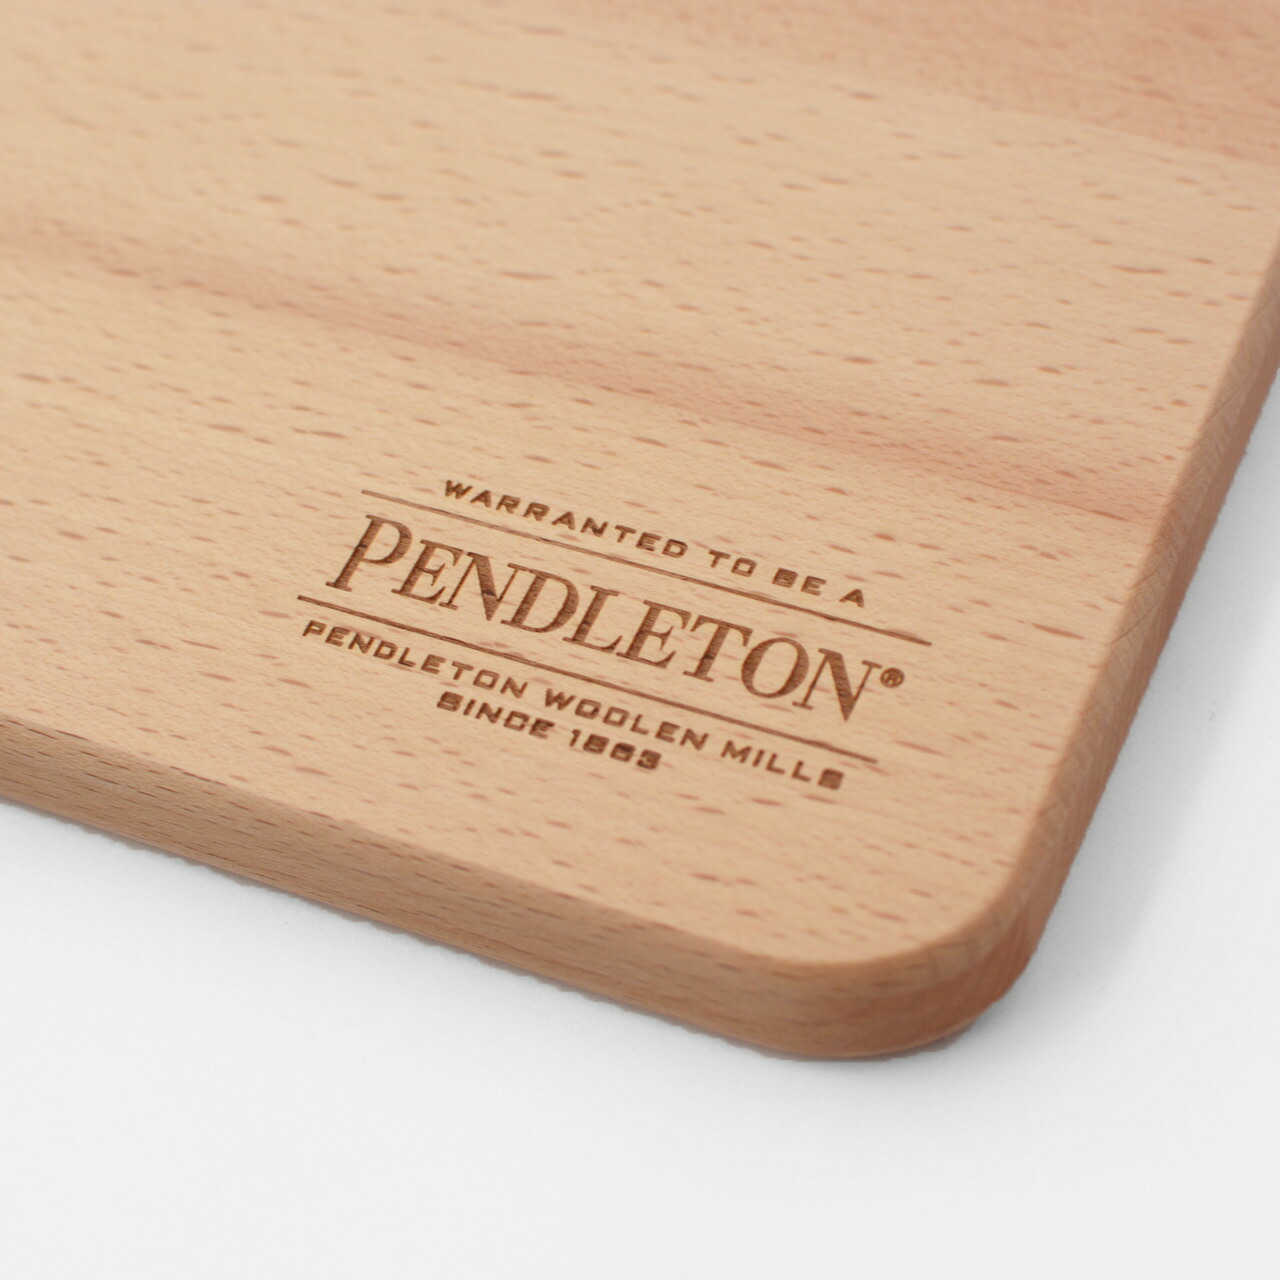 PENDLETON [ペンドルトン] Woody Flat Cutting Board [19804309 